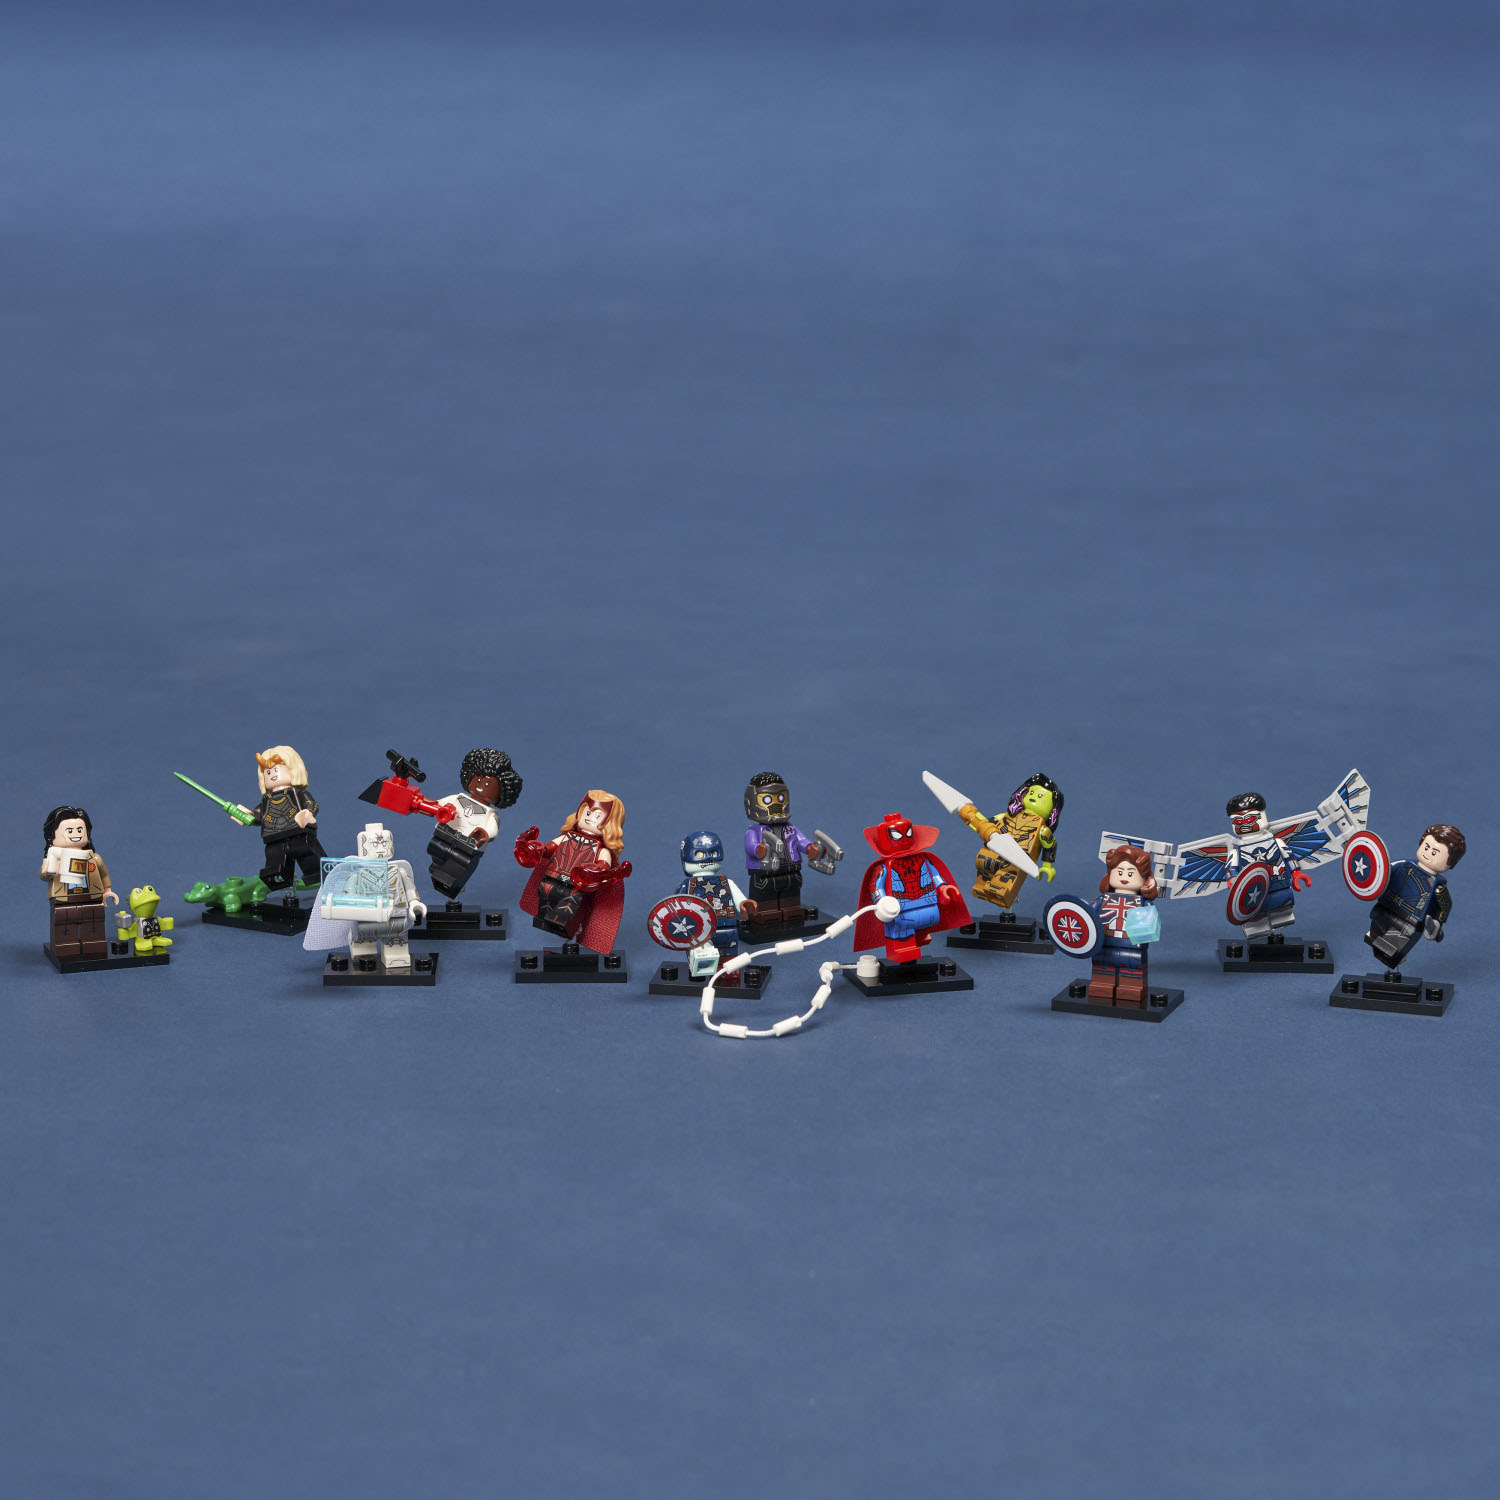 LEGO Minifigures Disney Series 2 Building Toy 71024 Blind Box 6251231 -  Best Buy